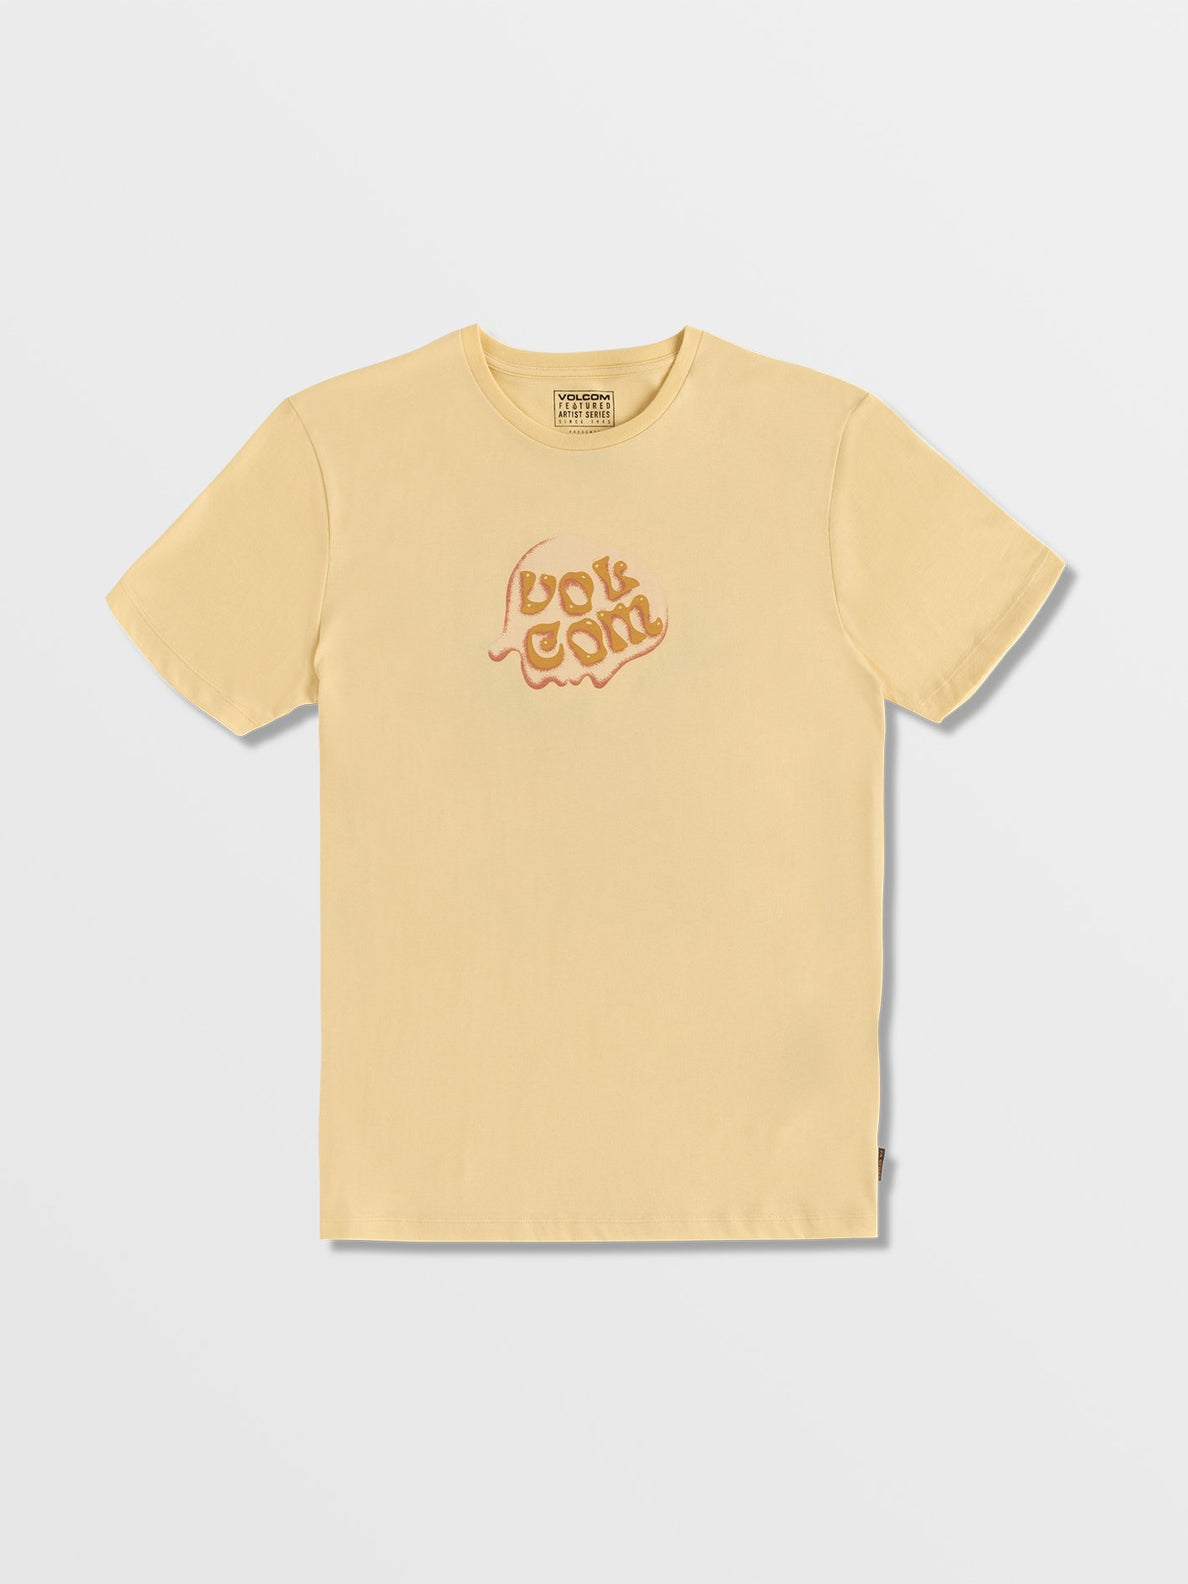 M. Loeffler T-shirt - Dawn Yellow